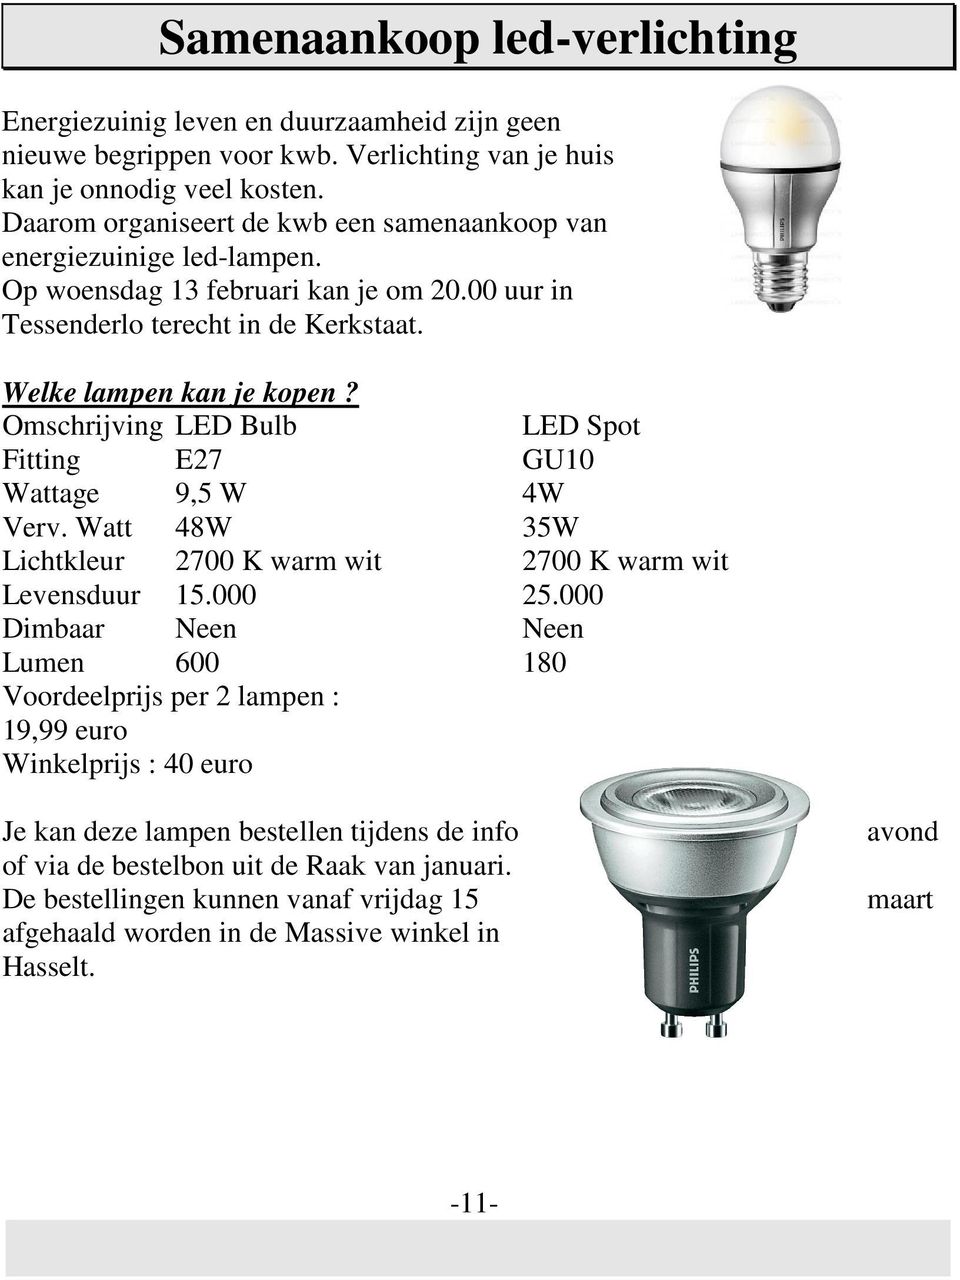 Omschrijving LED Bulb LED Spot Fitting E27 GU10 Wattage 9,5 W 4W Verv. Watt 48W 35W Lichtkleur 2700 K warm wit 2700 K warm wit Levensduur 15.000 25.